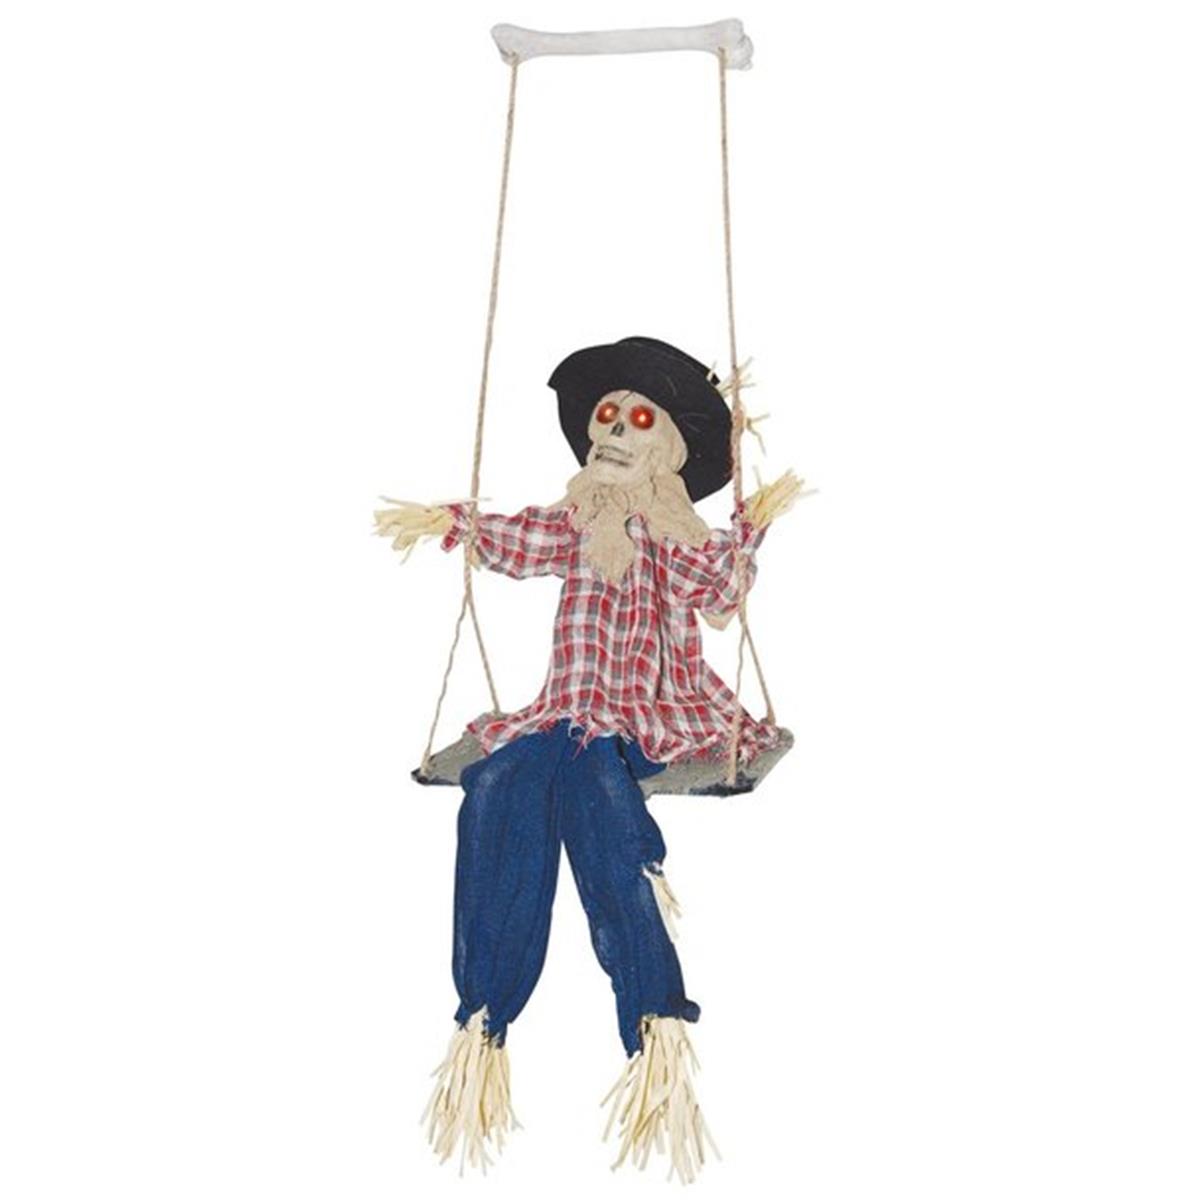 259863 Kicking Scarecrow On Swing